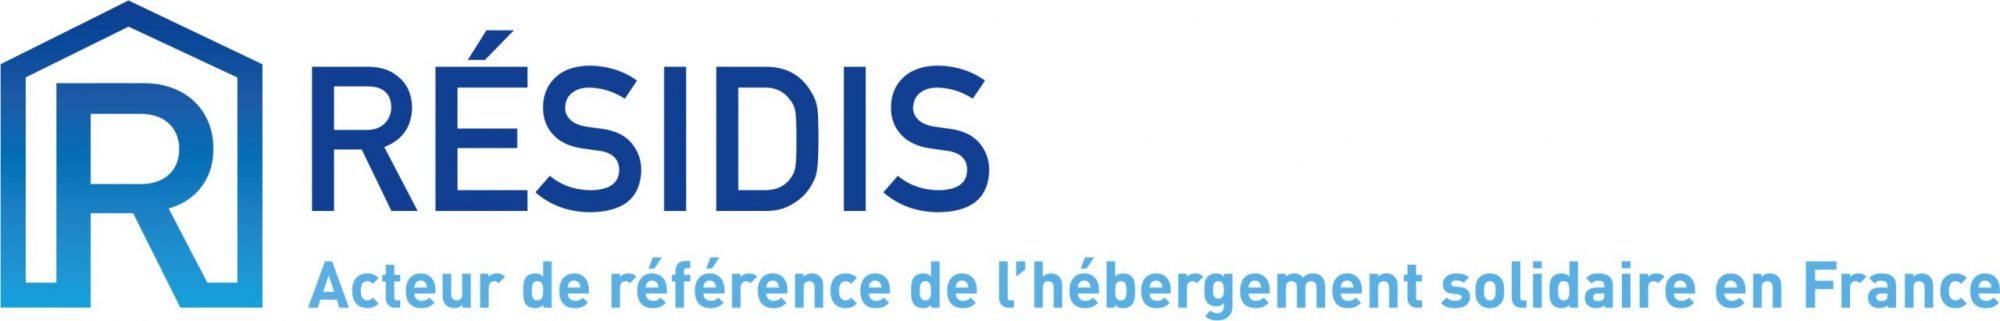 Logo_residis-base-line